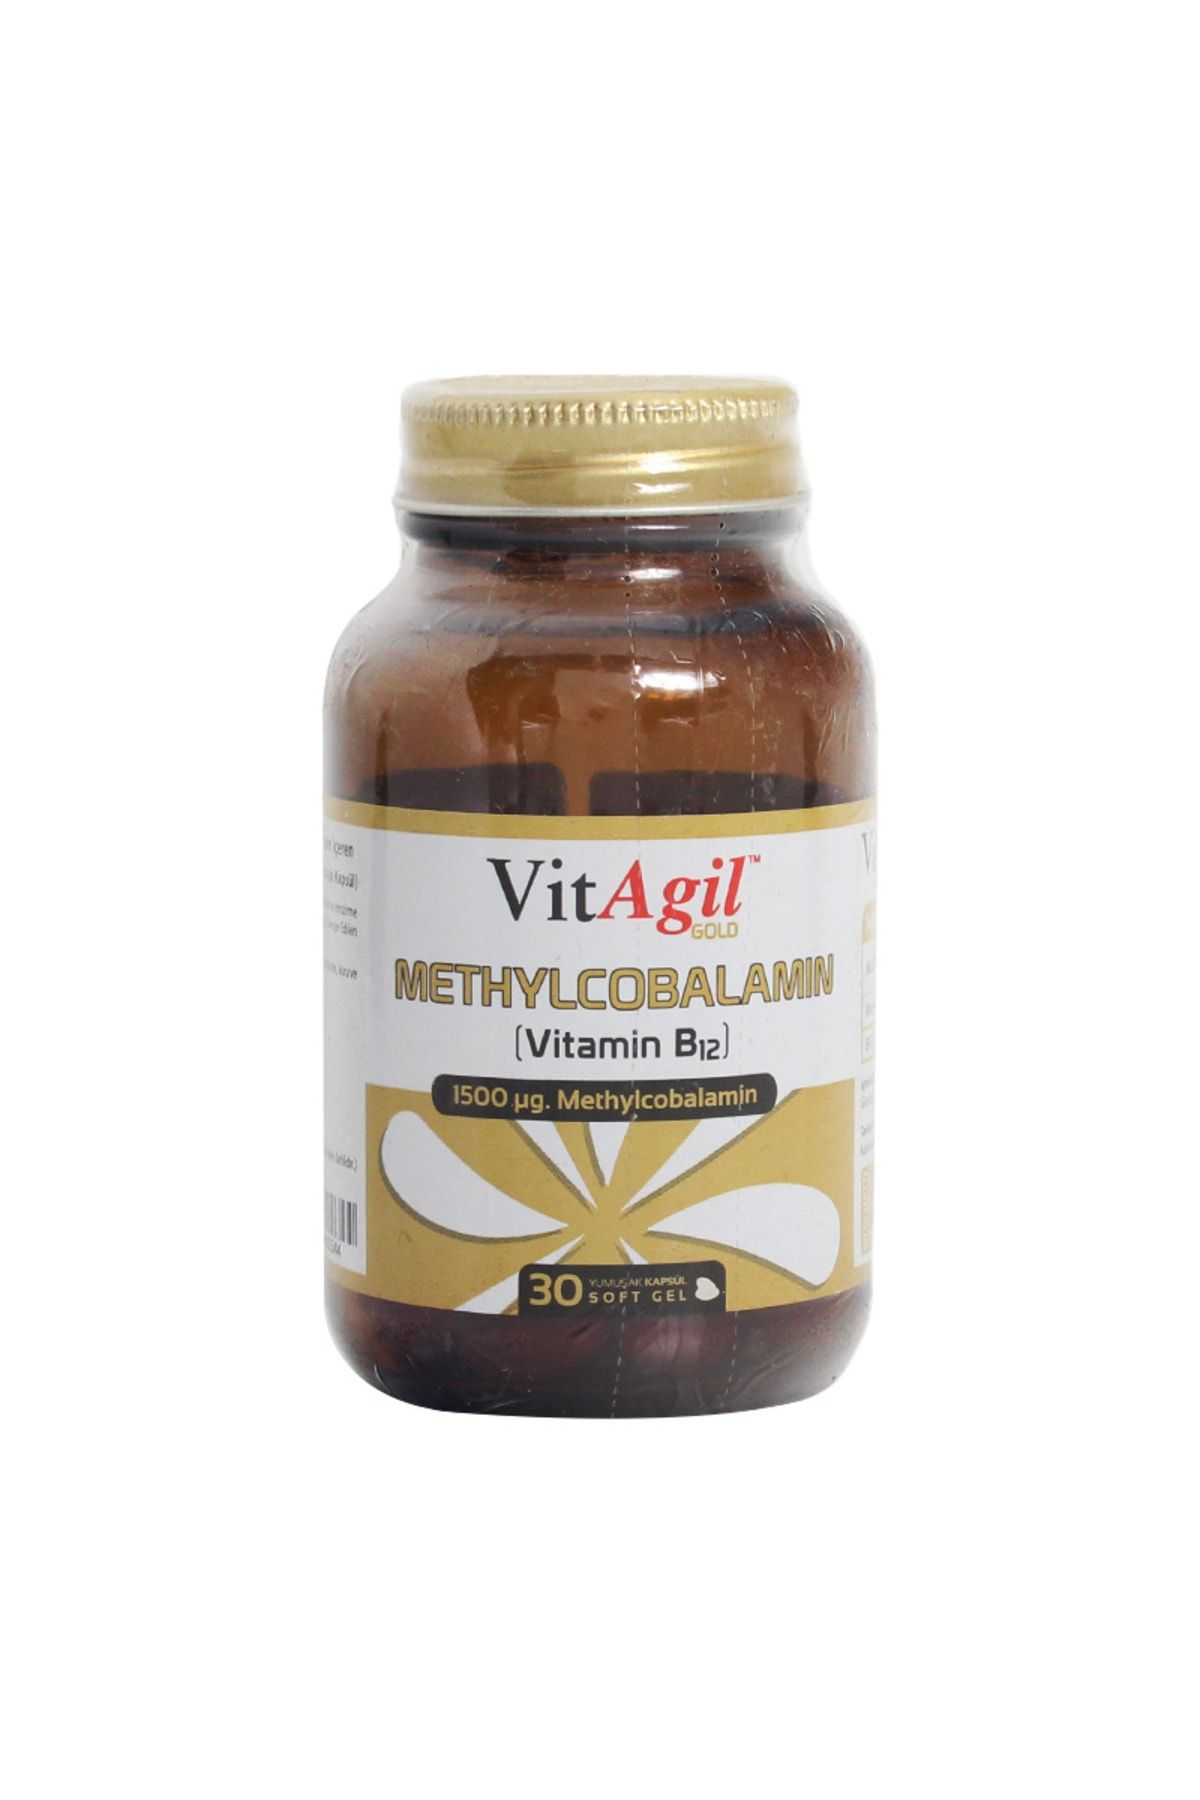 Allergo Vitagil Gold Methylcobalamin B12 30 Softgel